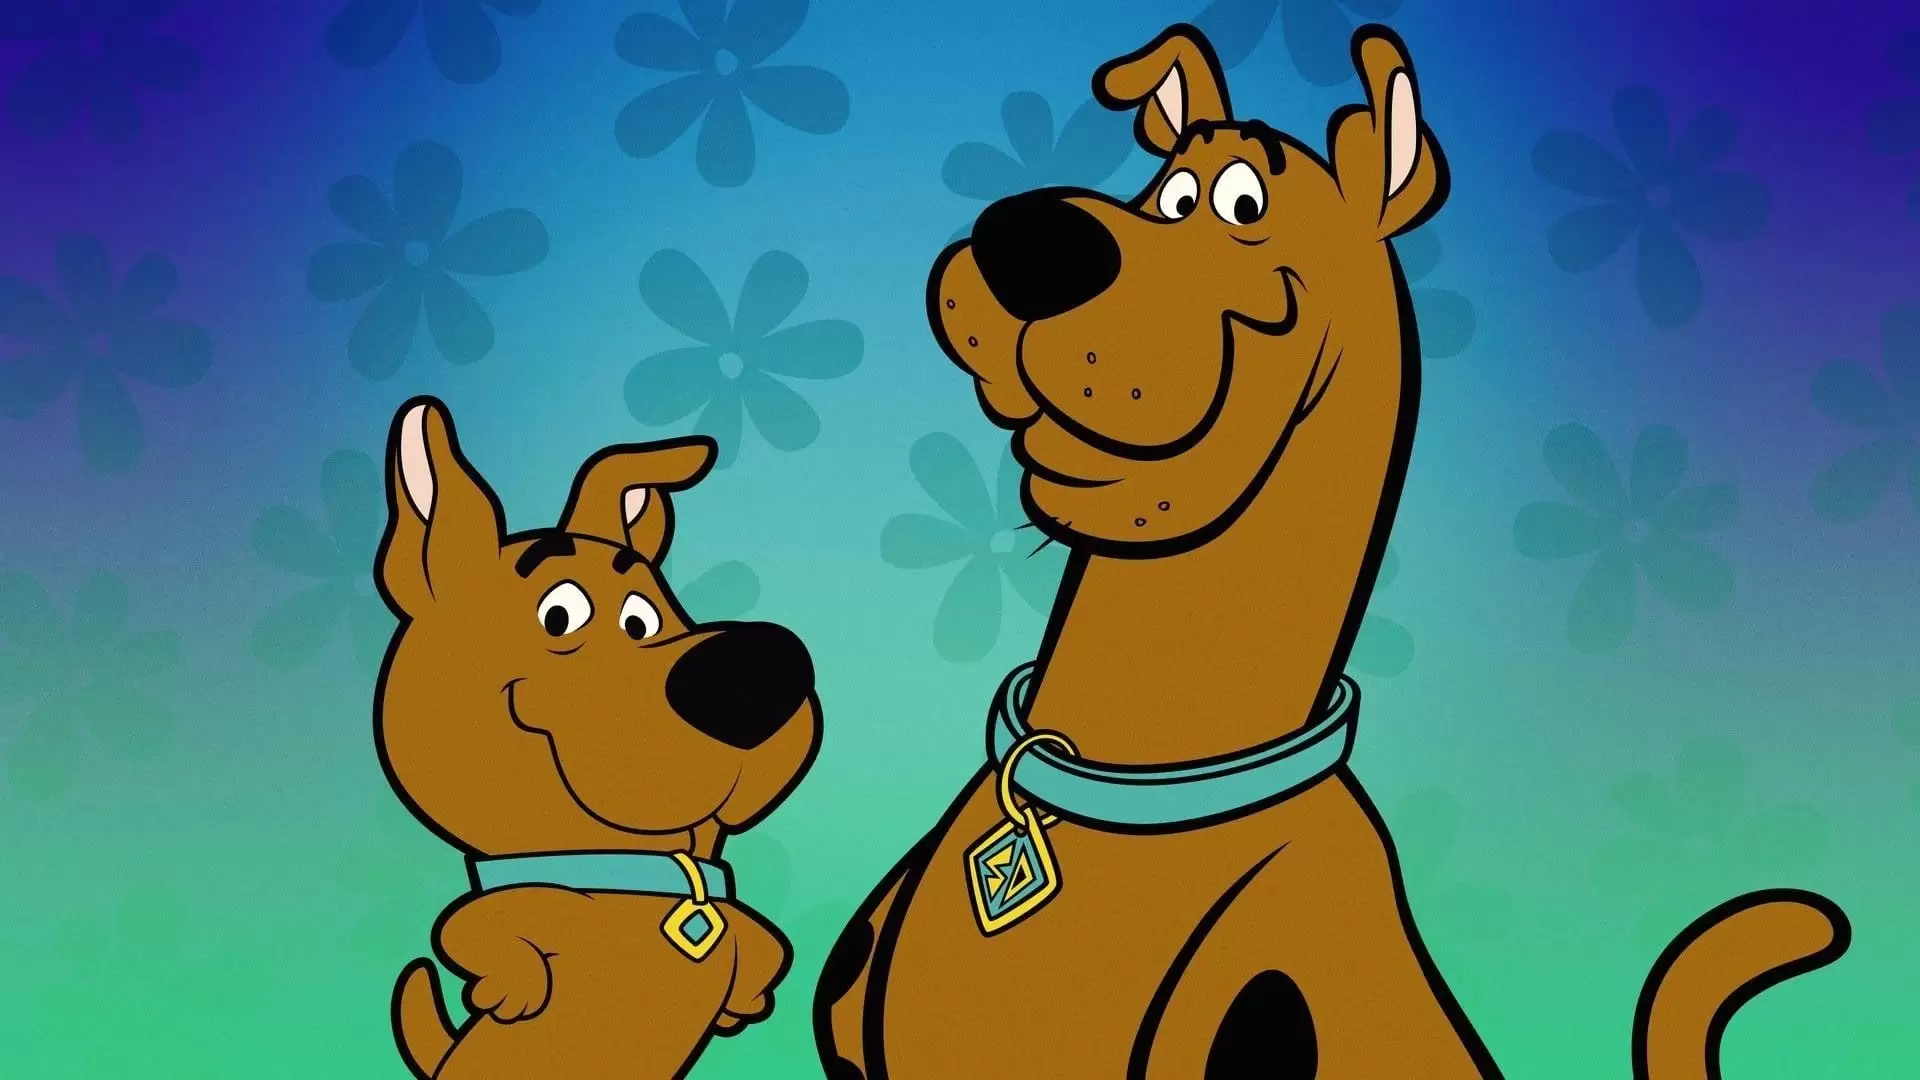 دانلود انیمیشن Scooby-Doo and Scrappy-Doo 1979